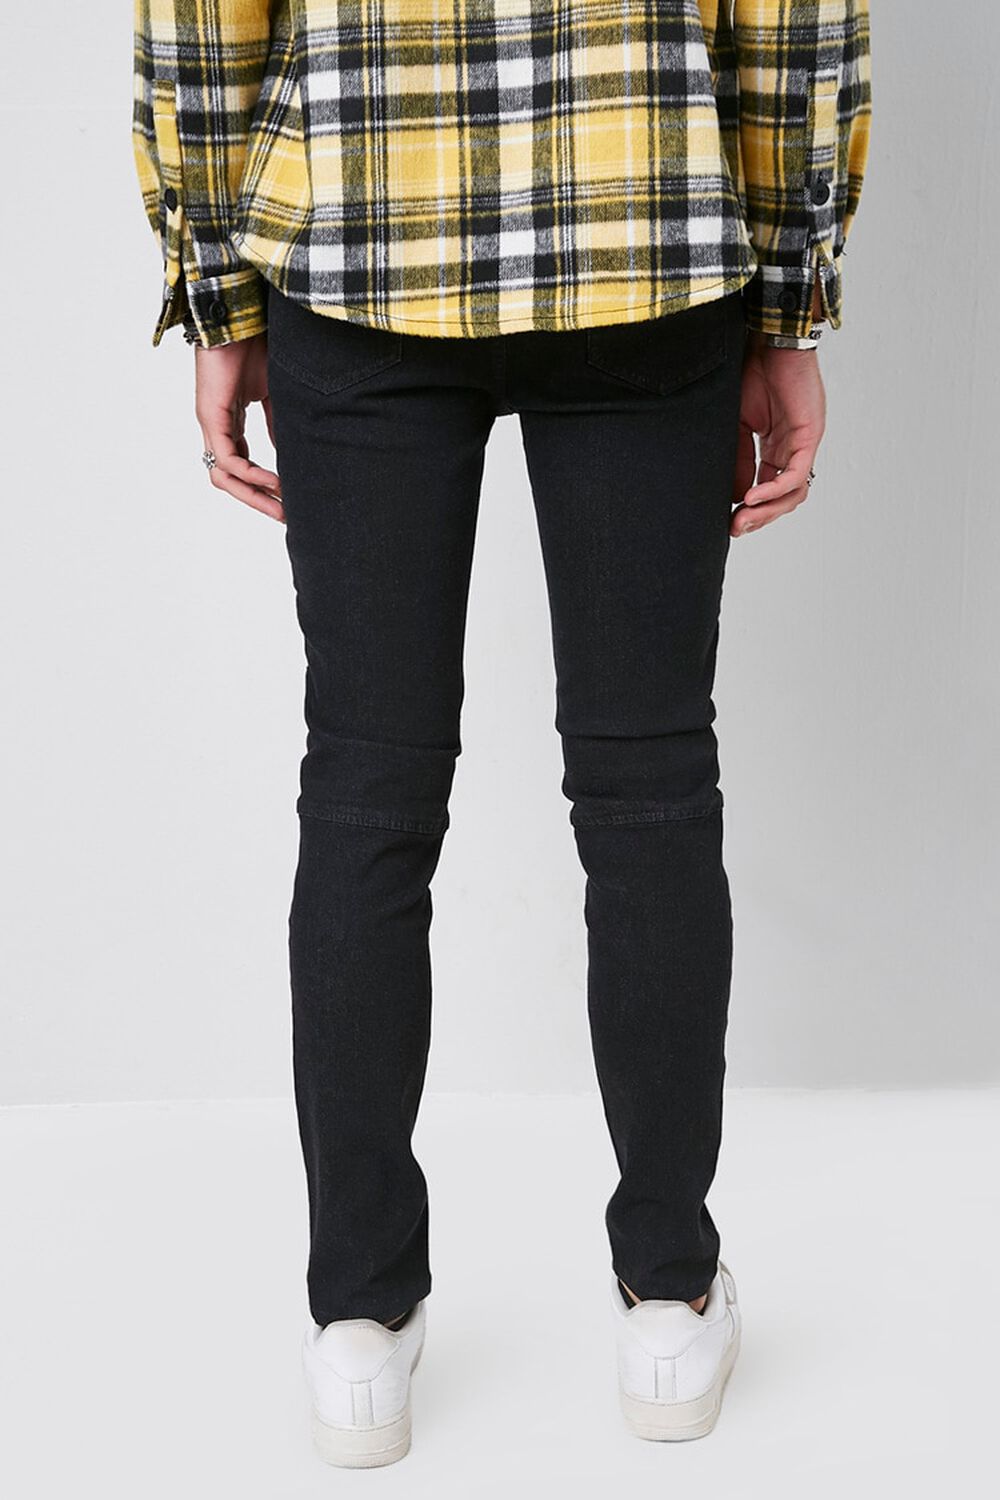 Skinny Zippered Moto Jeans, image 3